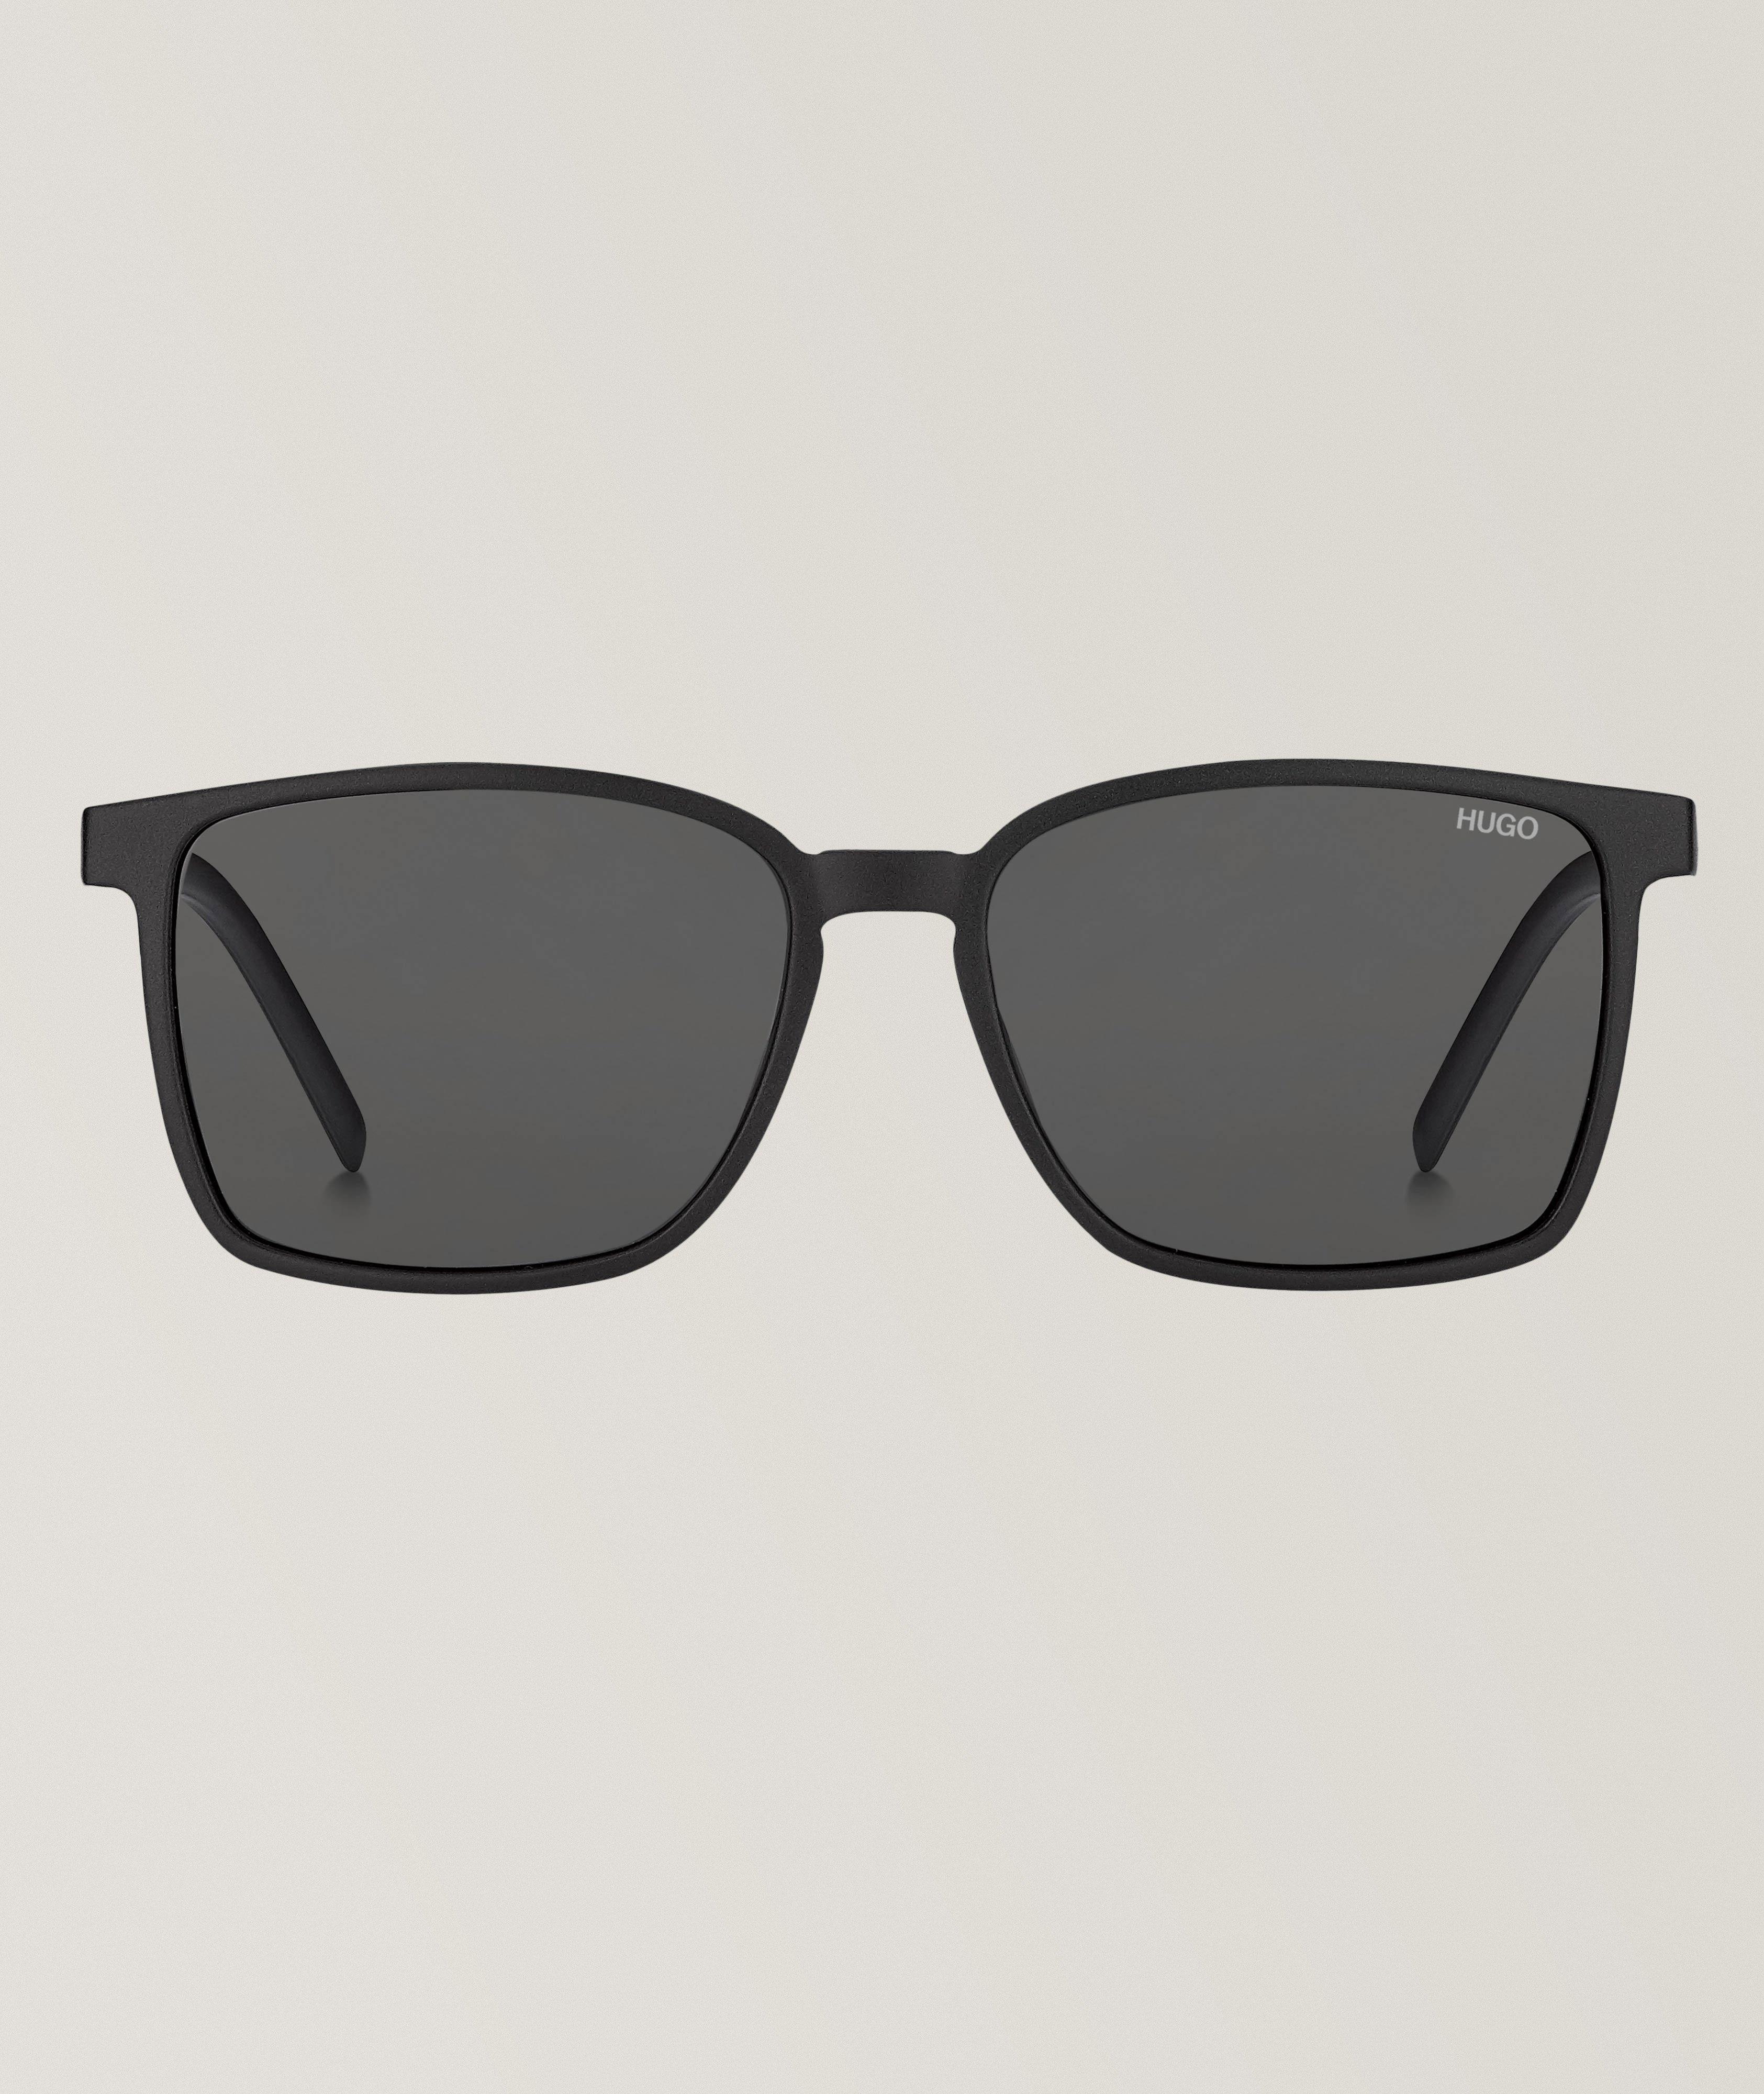 Hugo Matt Black Sunglasses With Grey Lenses